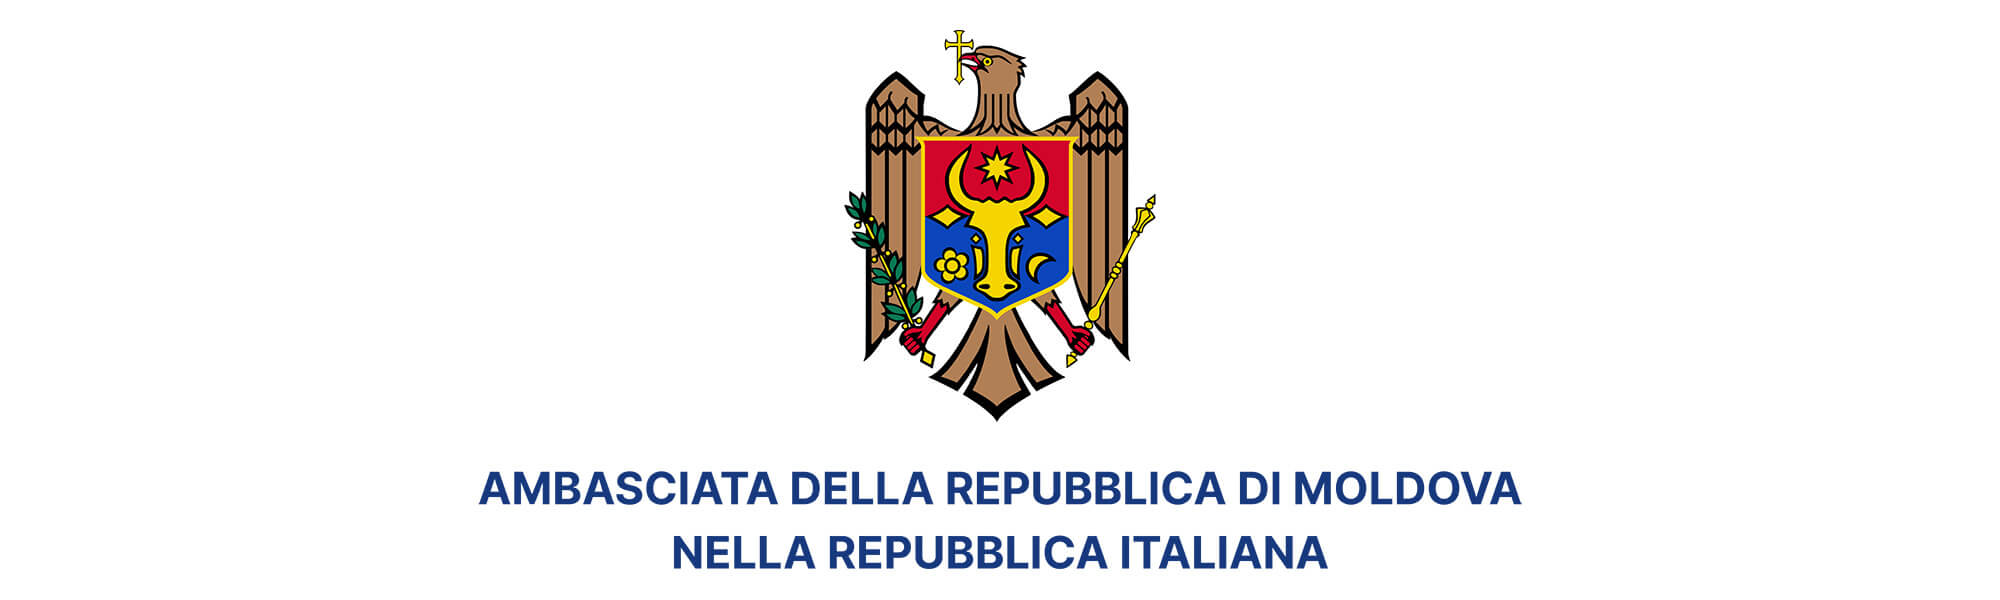 Ambasciata-della-moldova